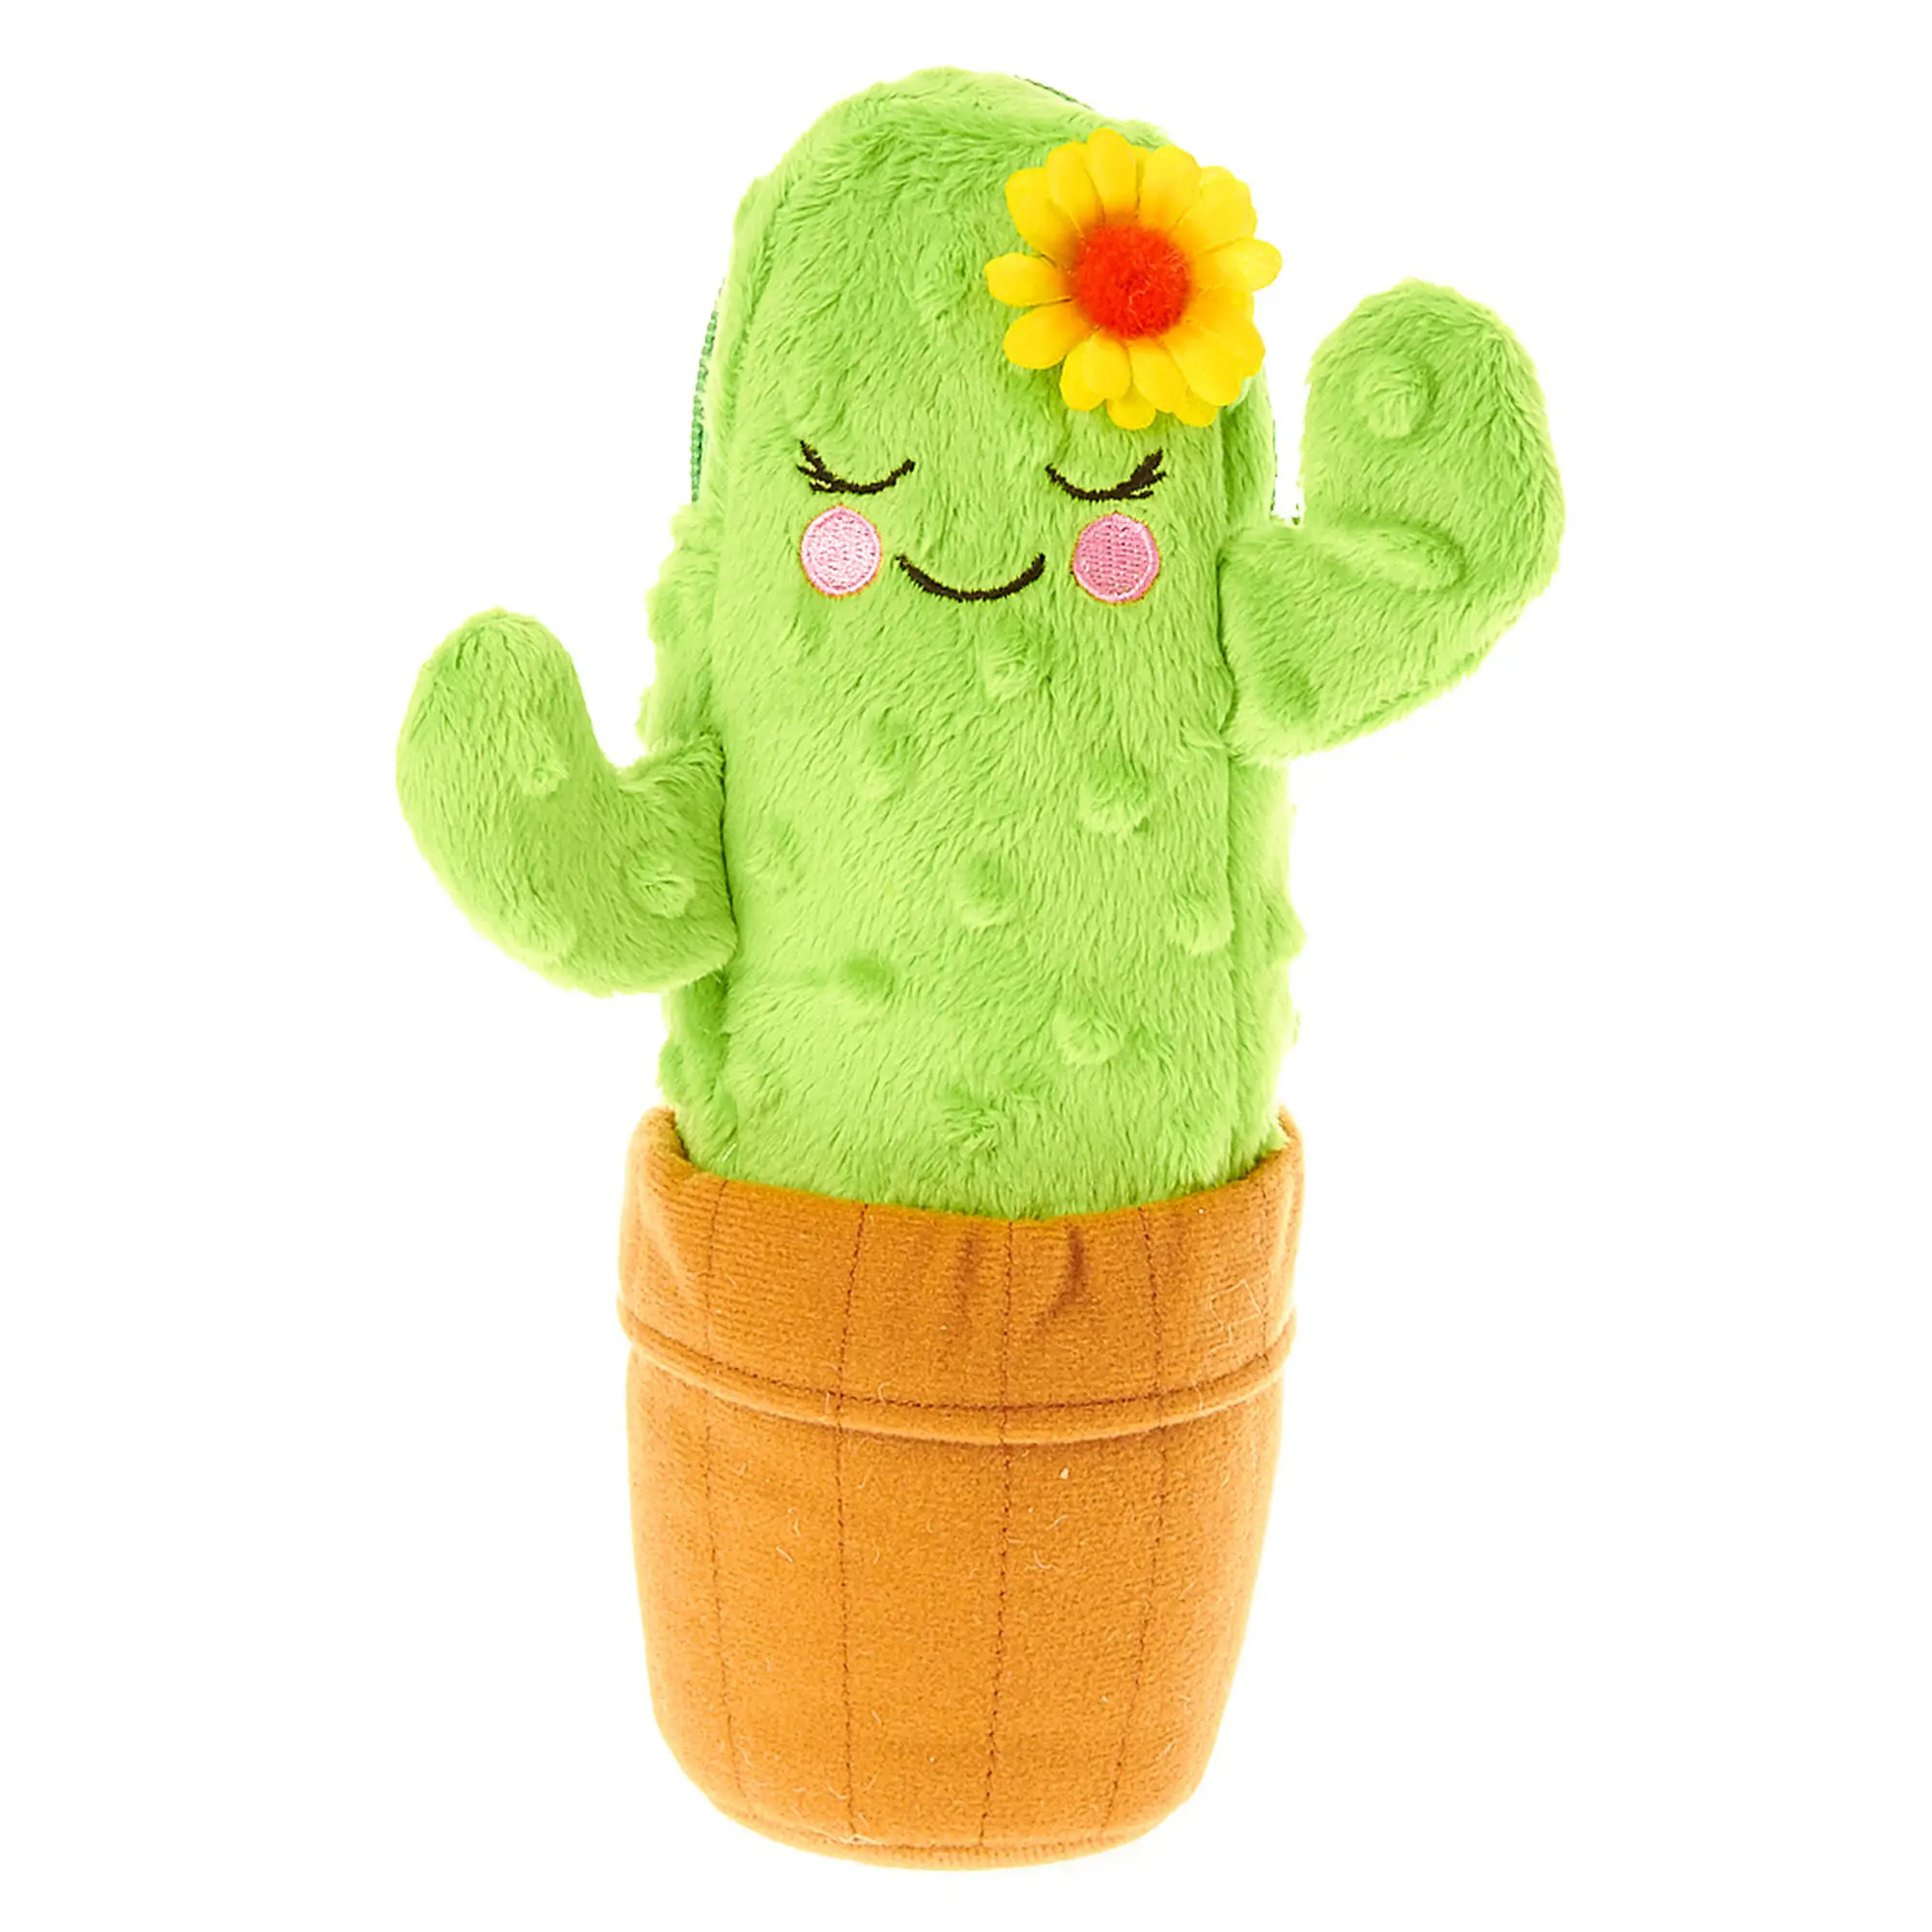 Cactus Plant Cute Soft Plush Toy Doll